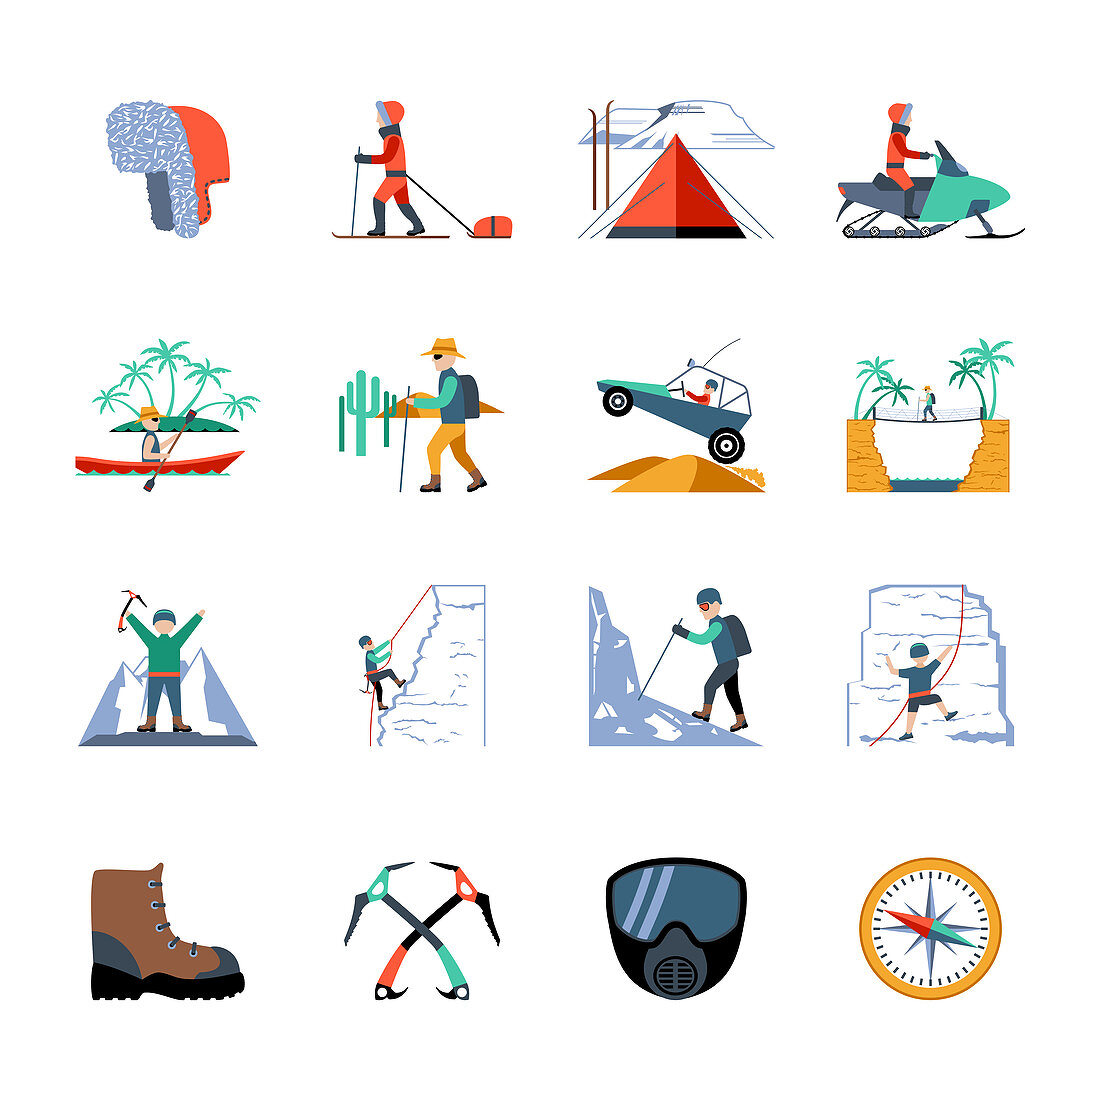 Outdoor pursuit icons, illustration